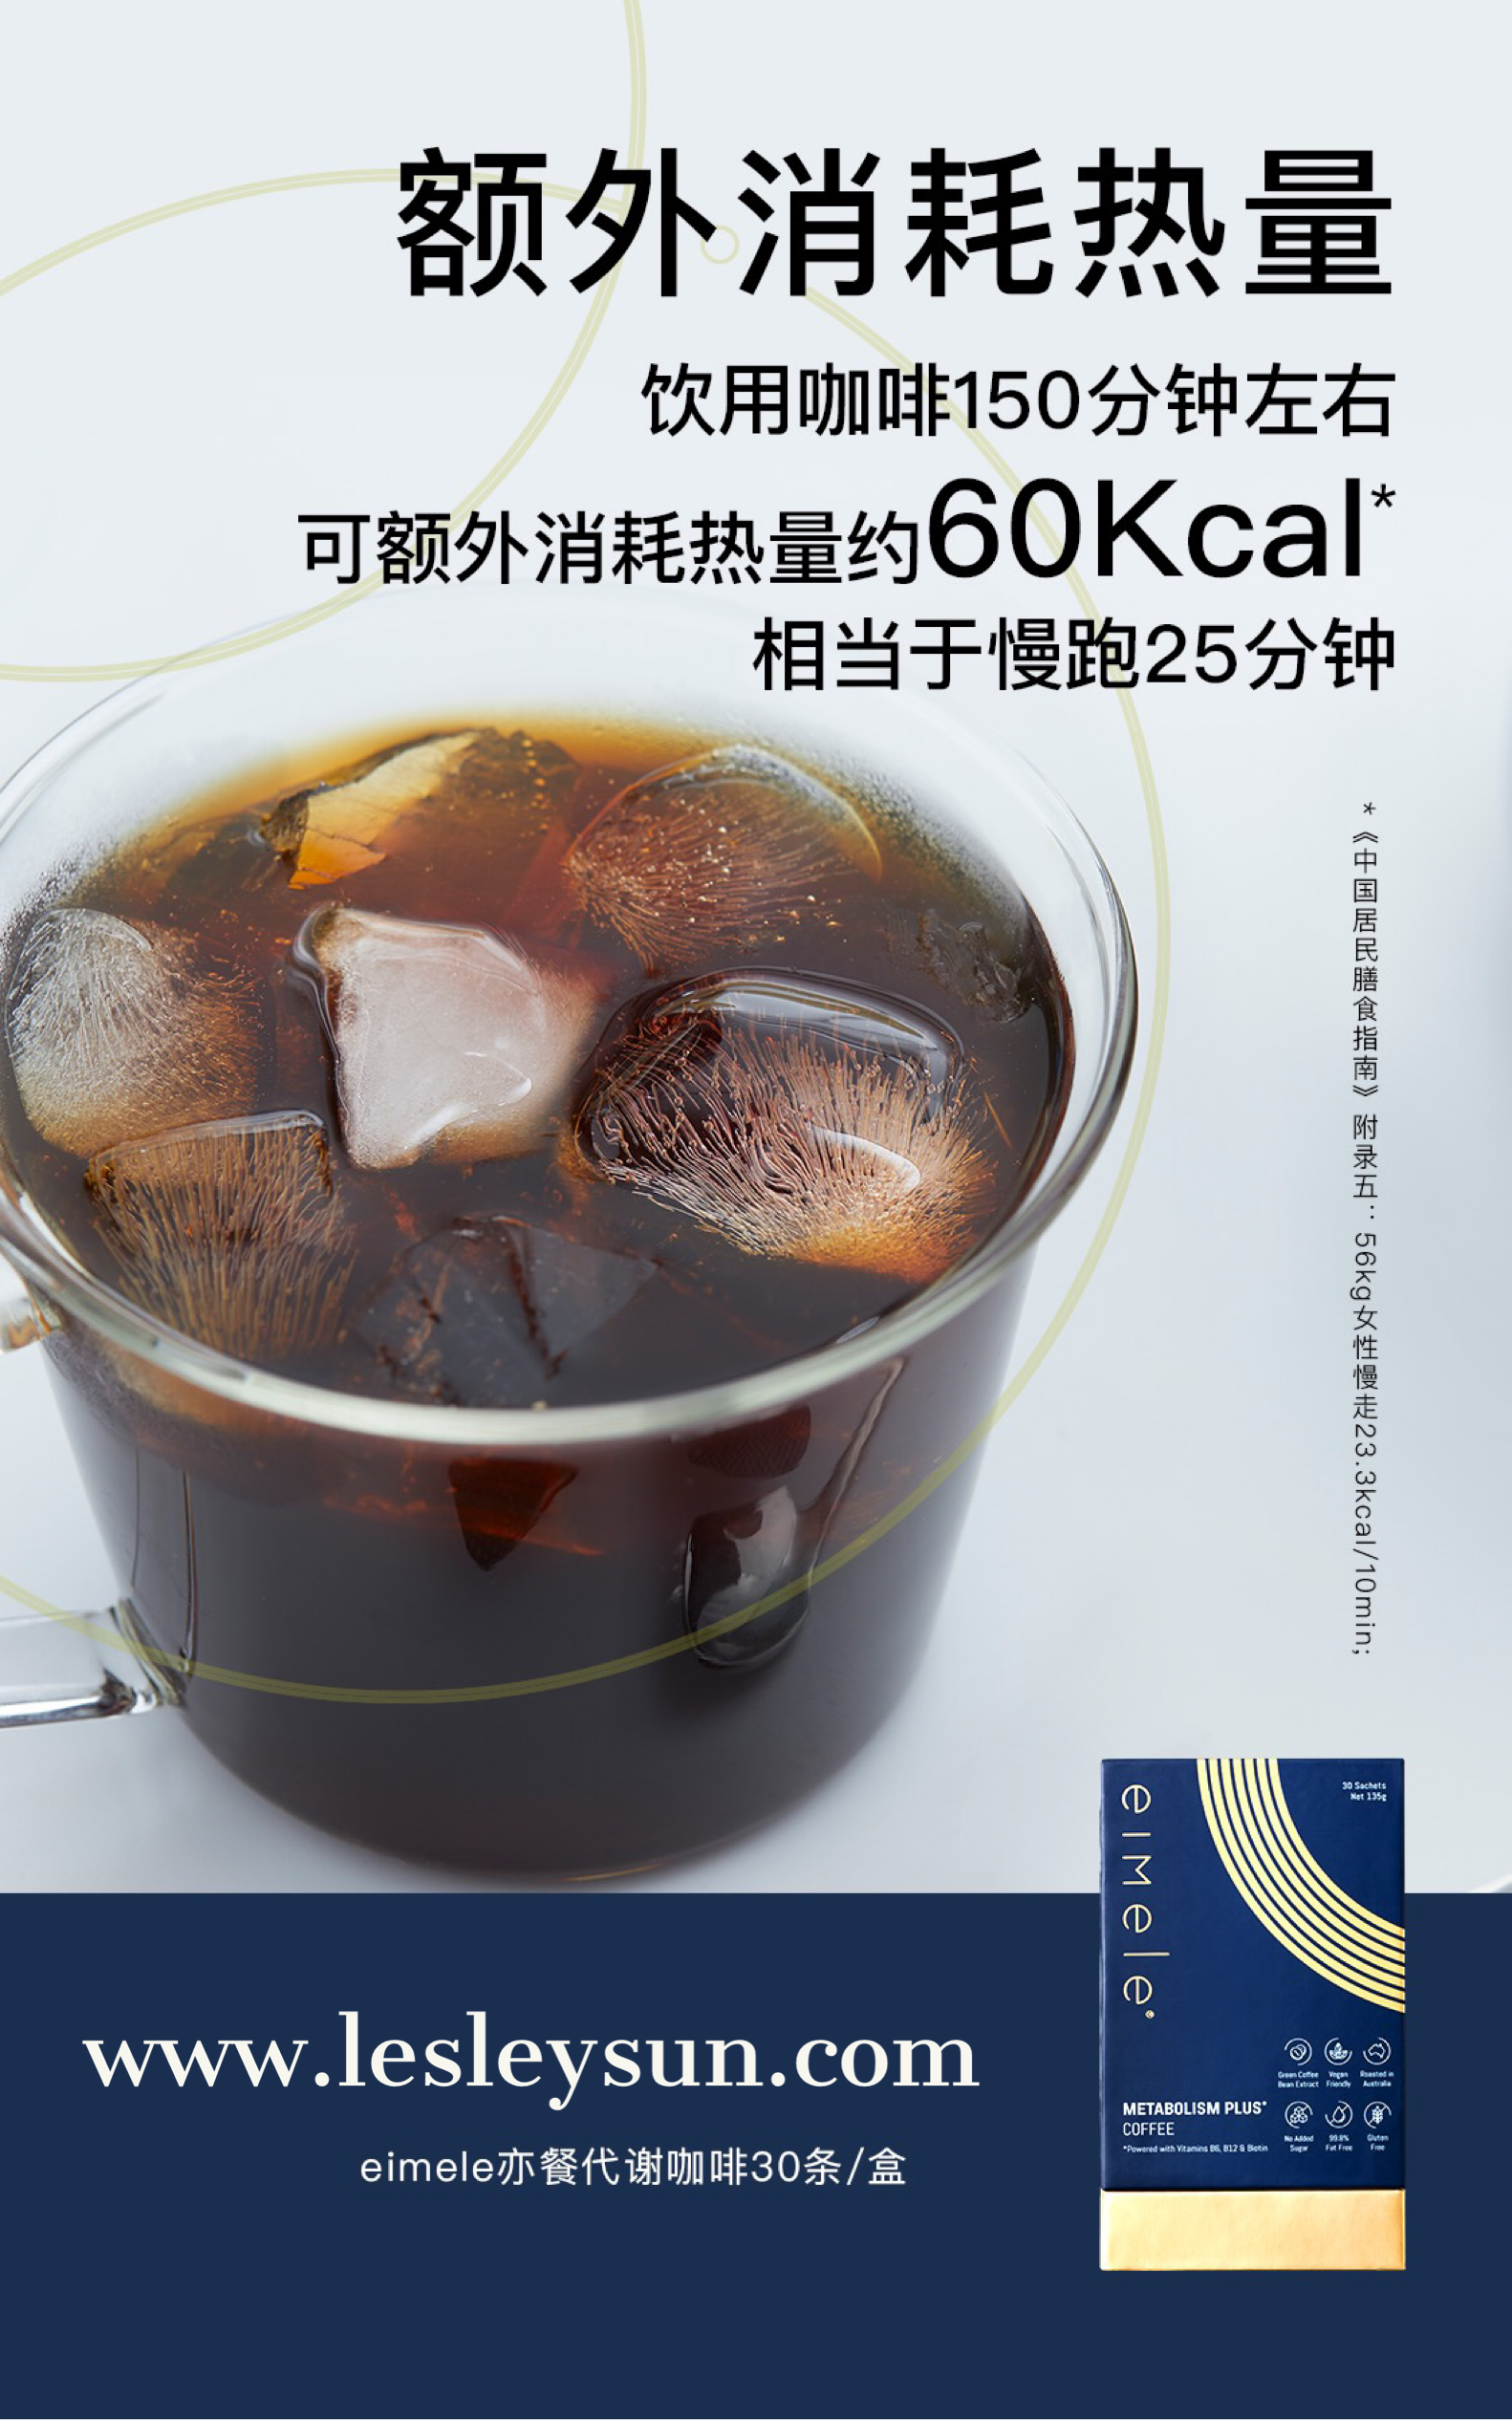 Eimele Metabolism Plus Coffee 代谢咖啡 (Ready Stocks)